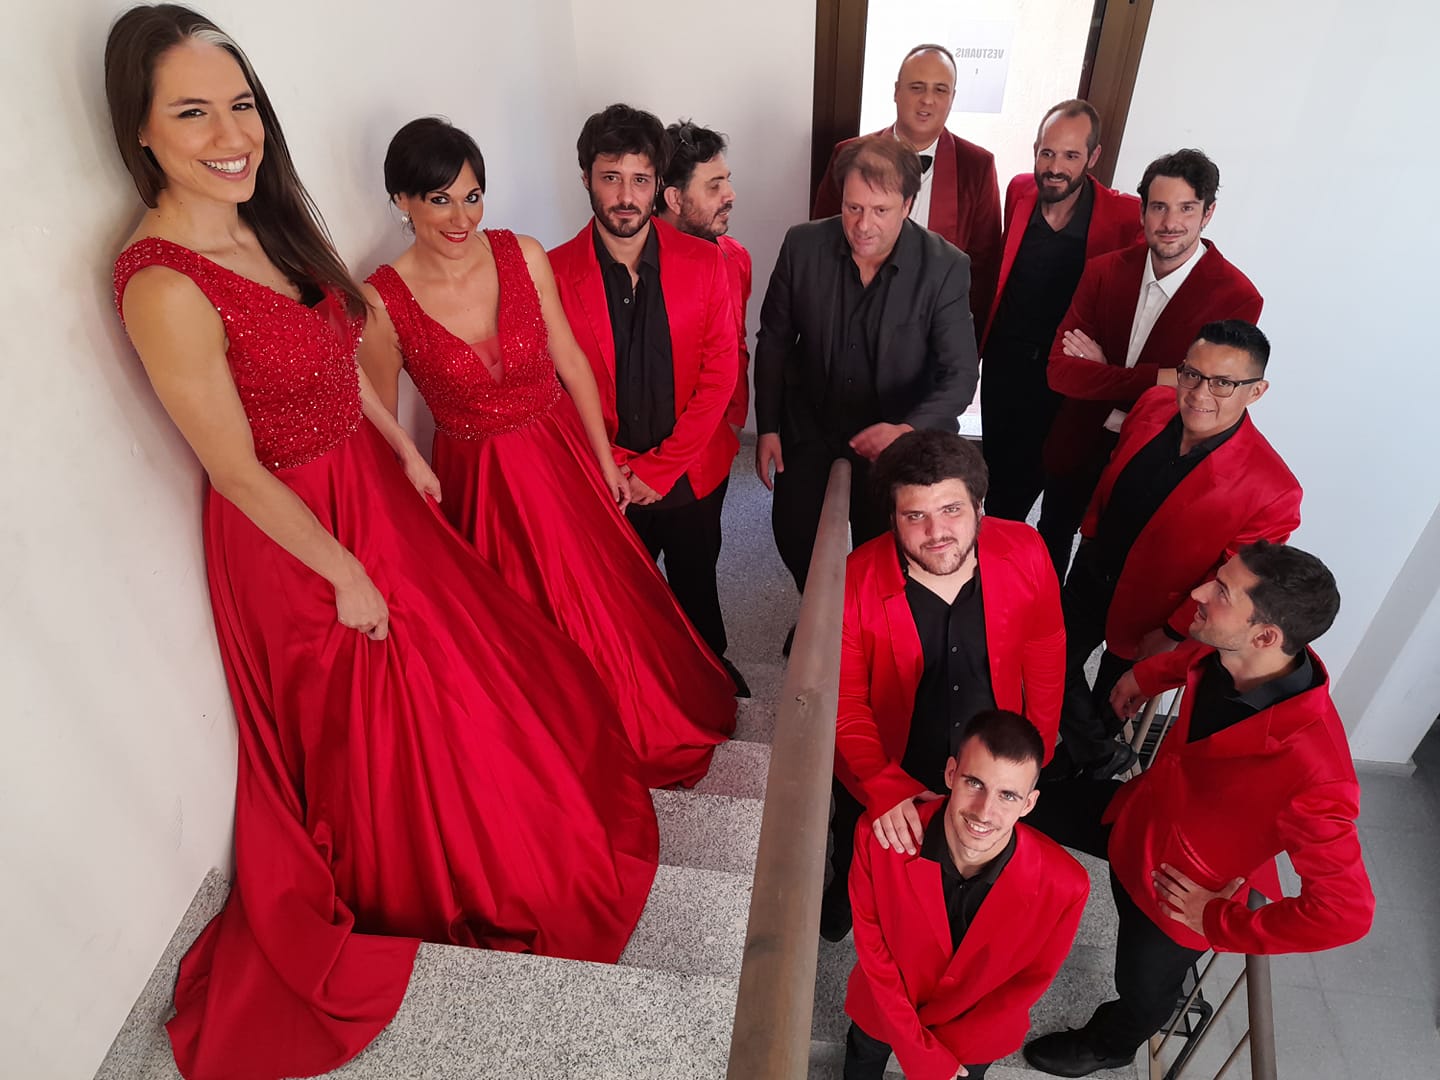 Orquestra Parfills Música: Grupos orquestales populares en Barcelona